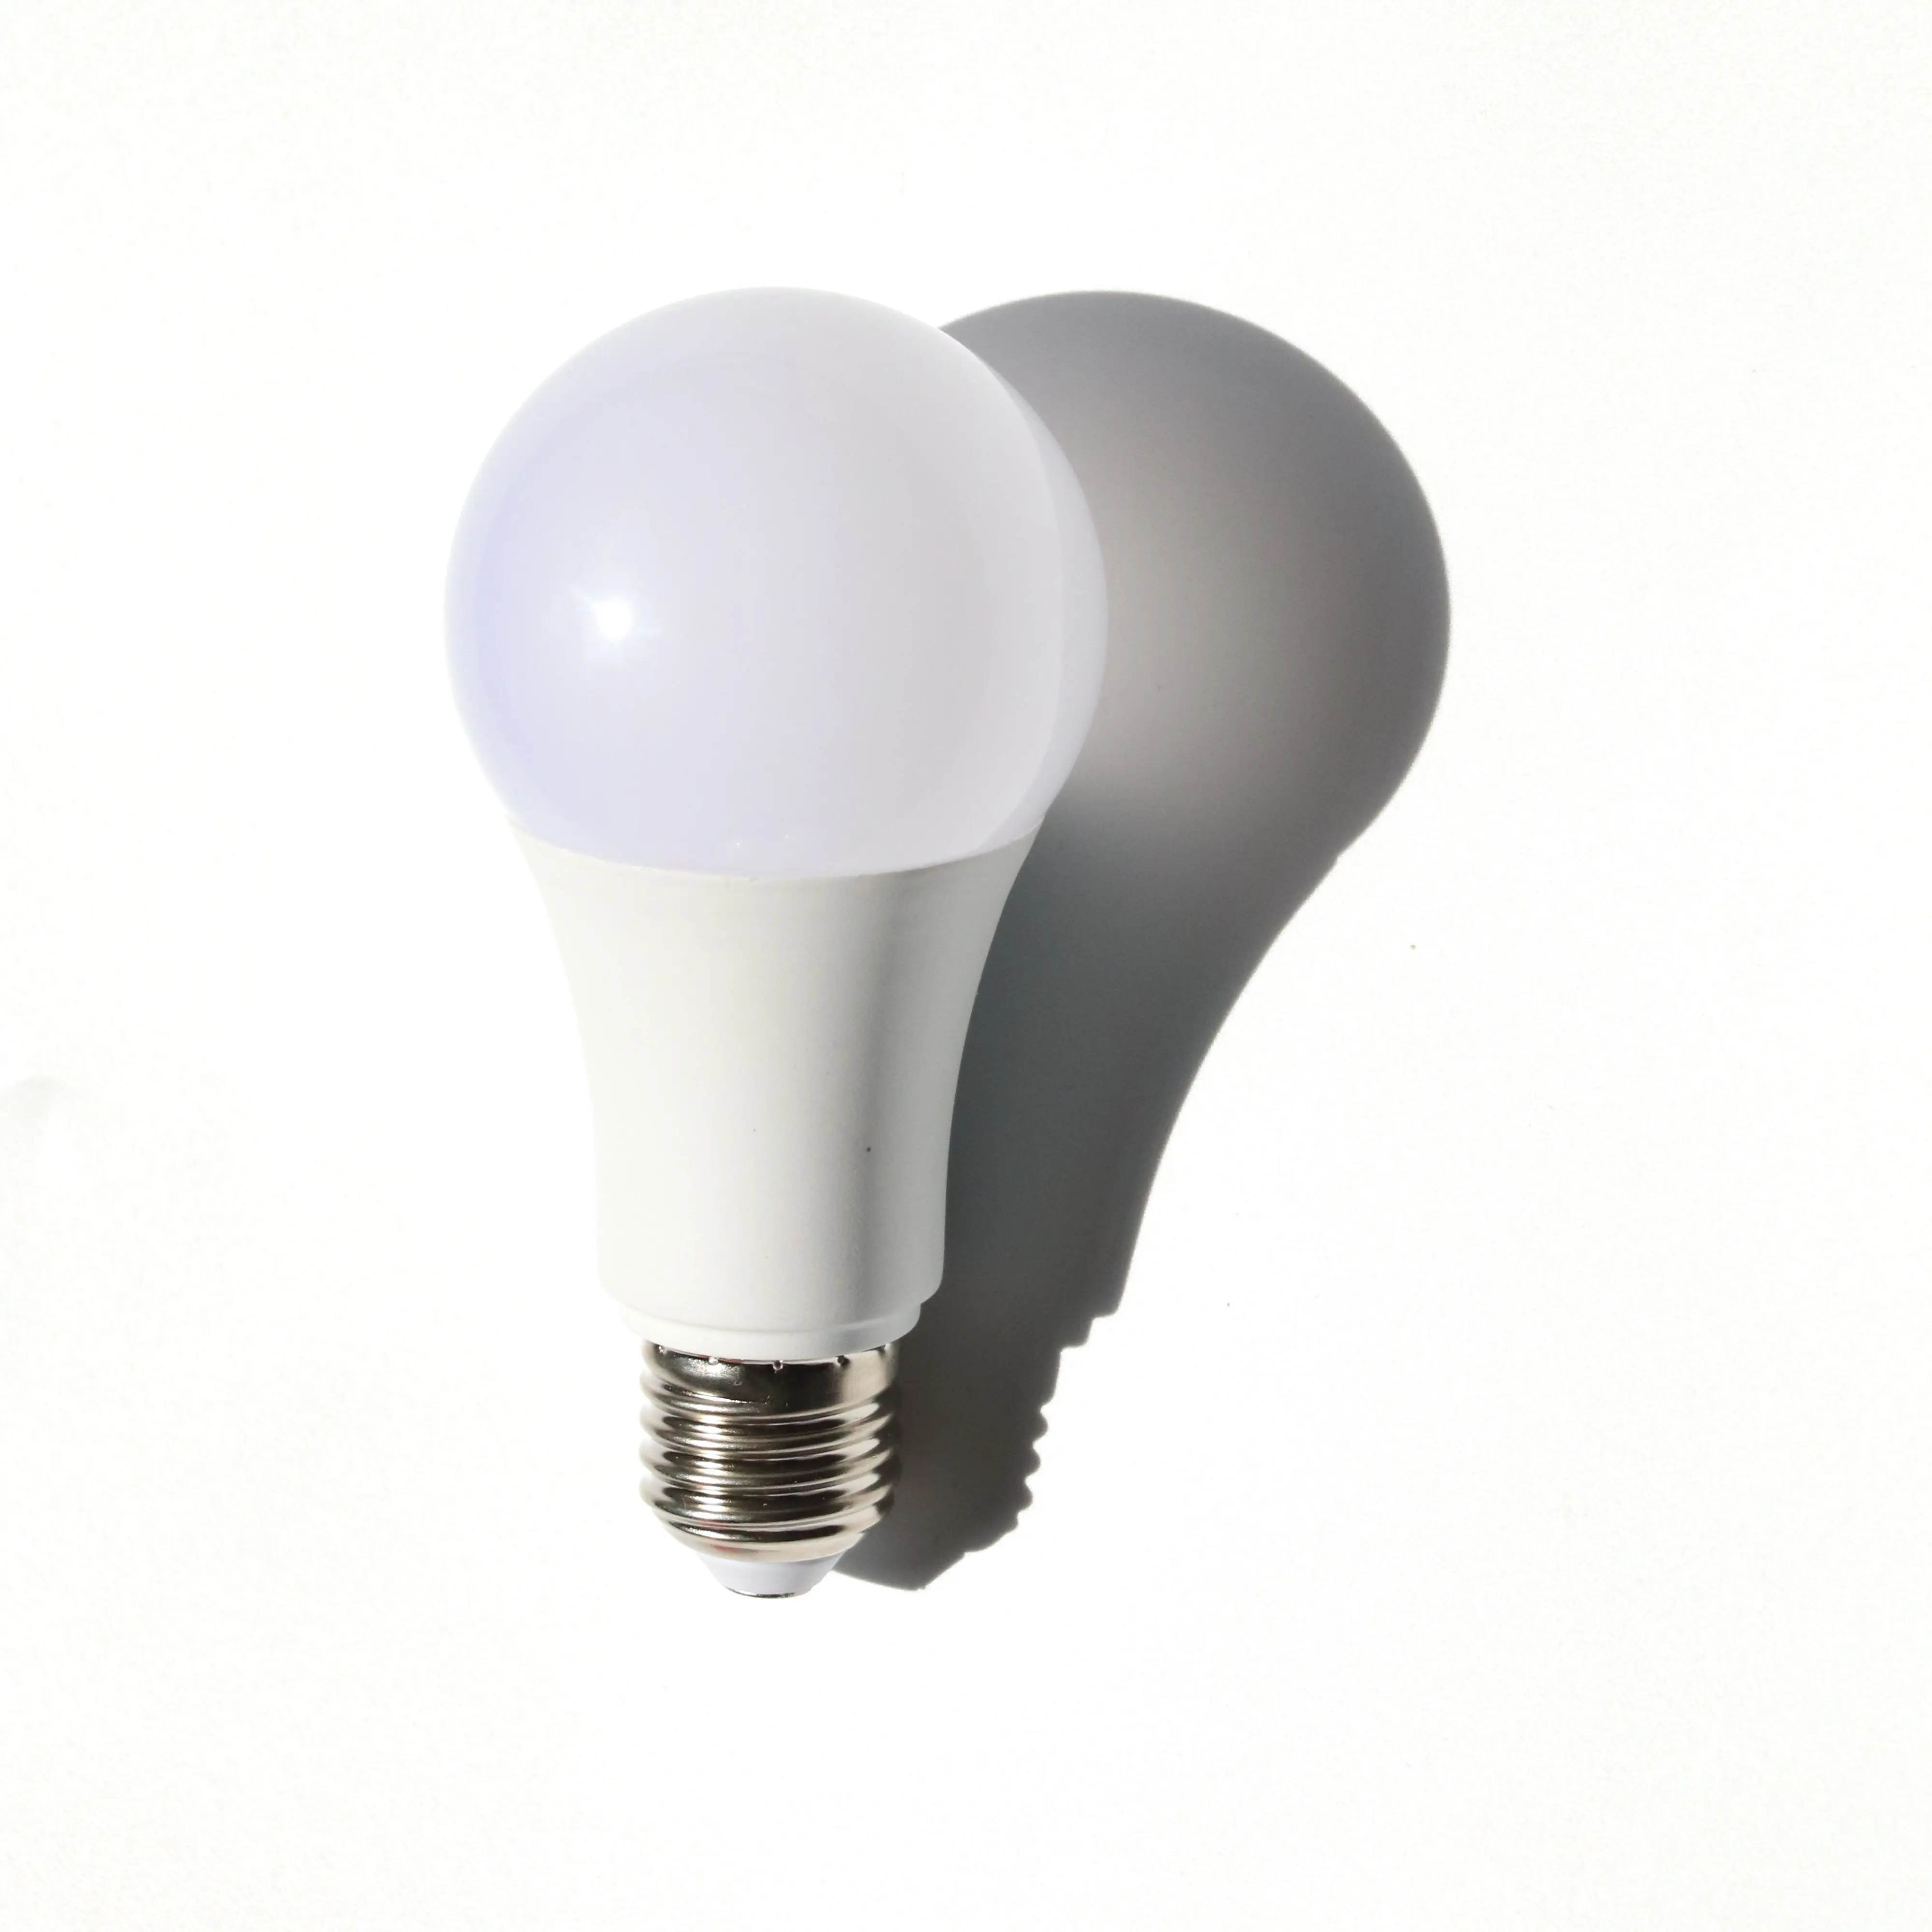 A19 E26 Led Lamp 100w Equivalent Led Light Bulbs 14w 1600 Lumens 5000k Daylight White Led Bulb